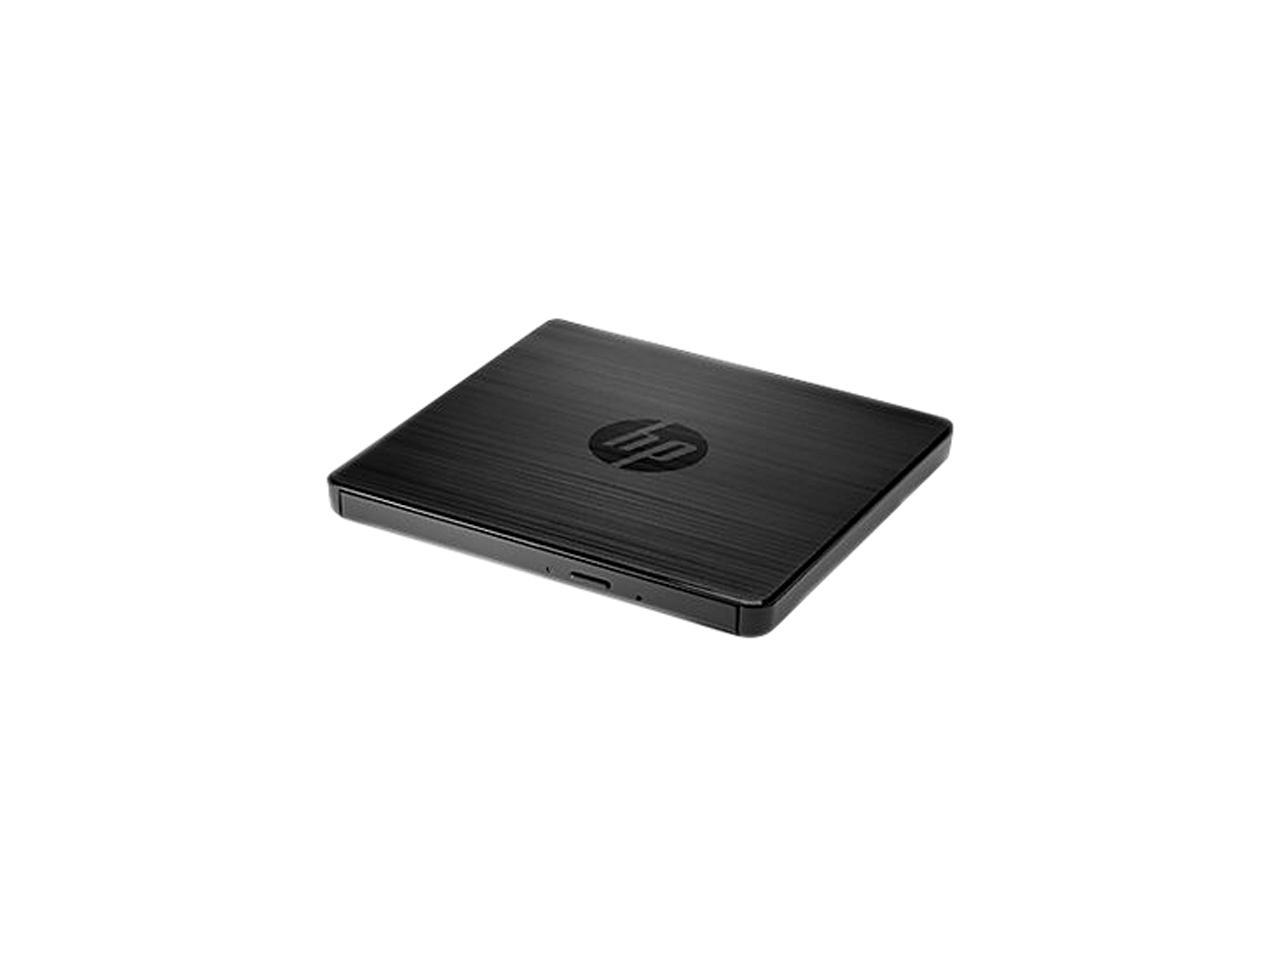 HP - Disk drive - DVD-RW - USB - external DVD-Writer - image 1 of 2